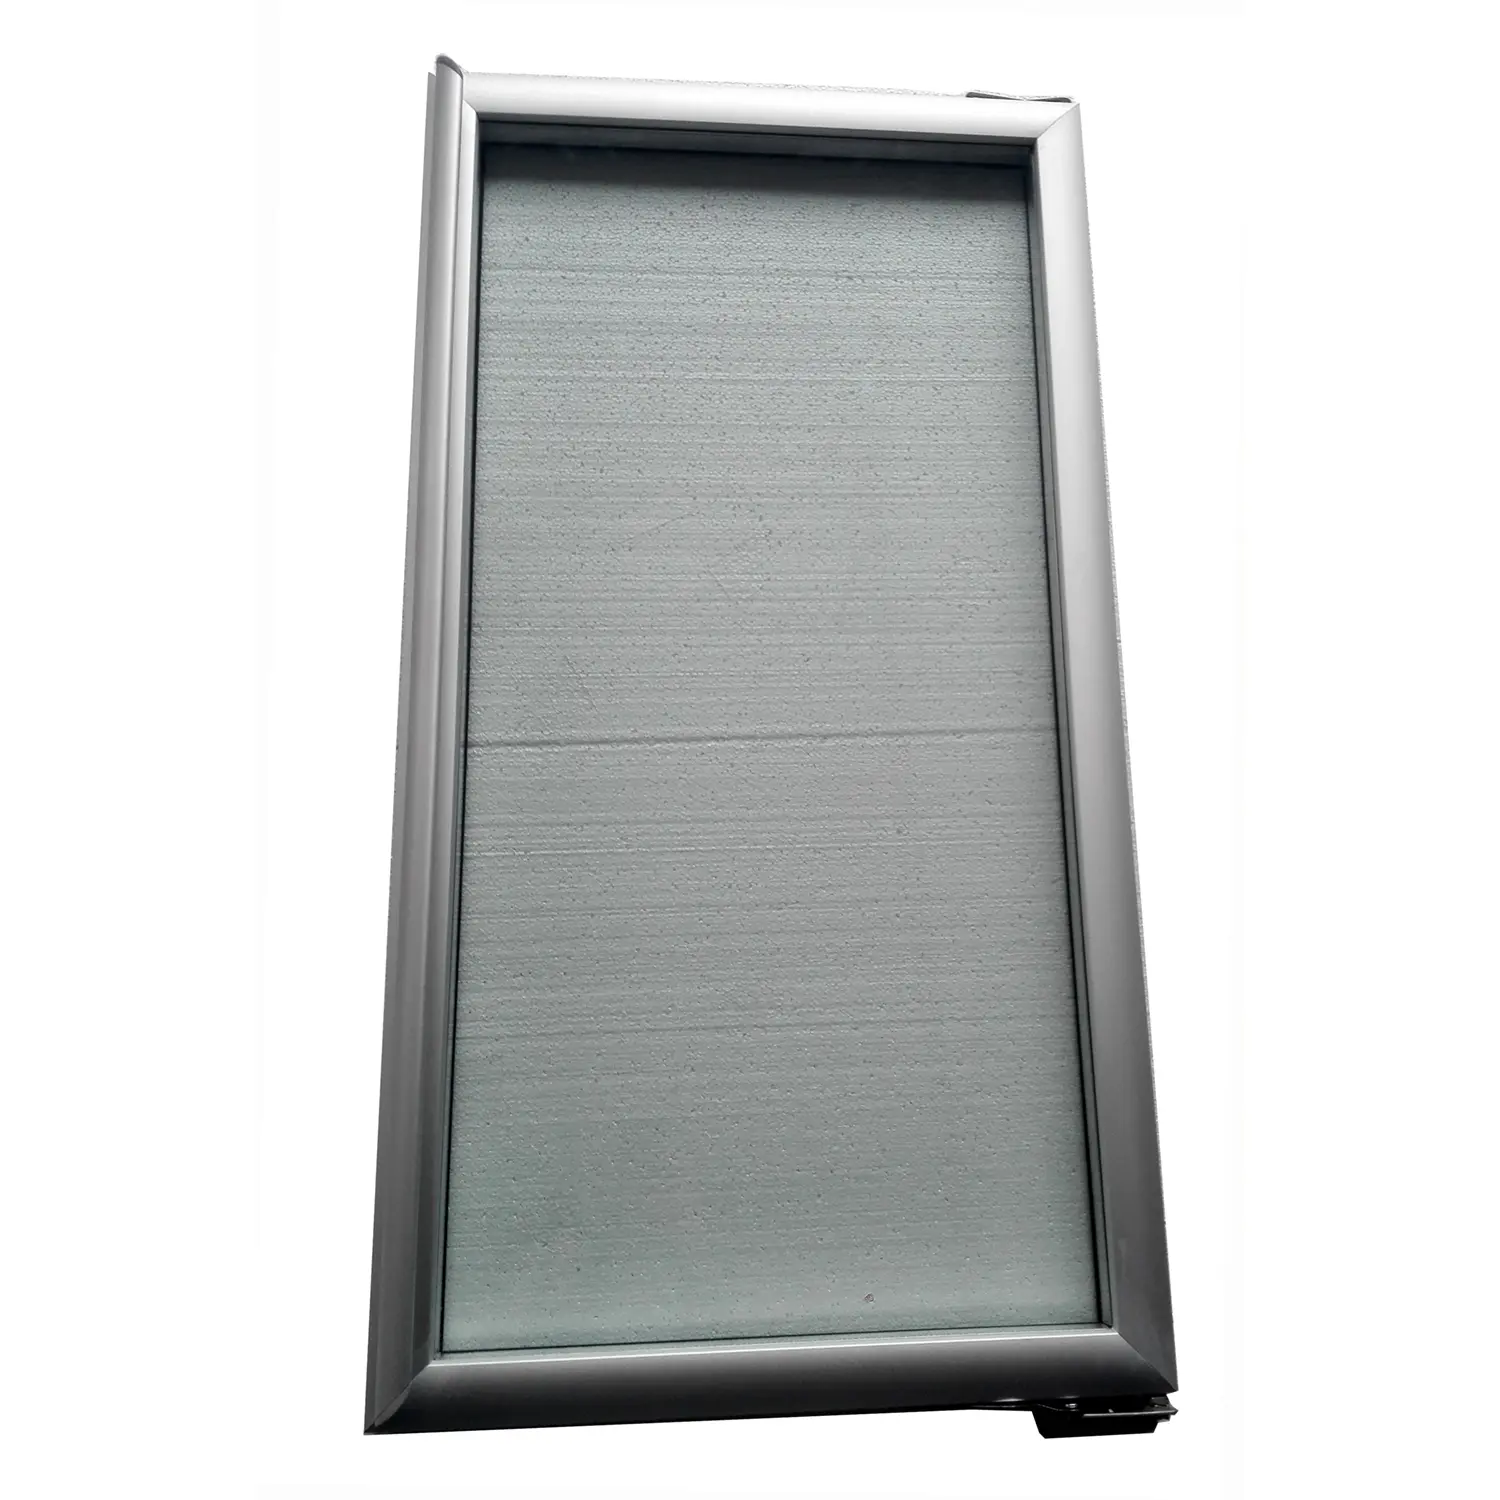 Yuebang Glass' Professional Upright Cooler & Freezer Glass Door with Aluminum Frame